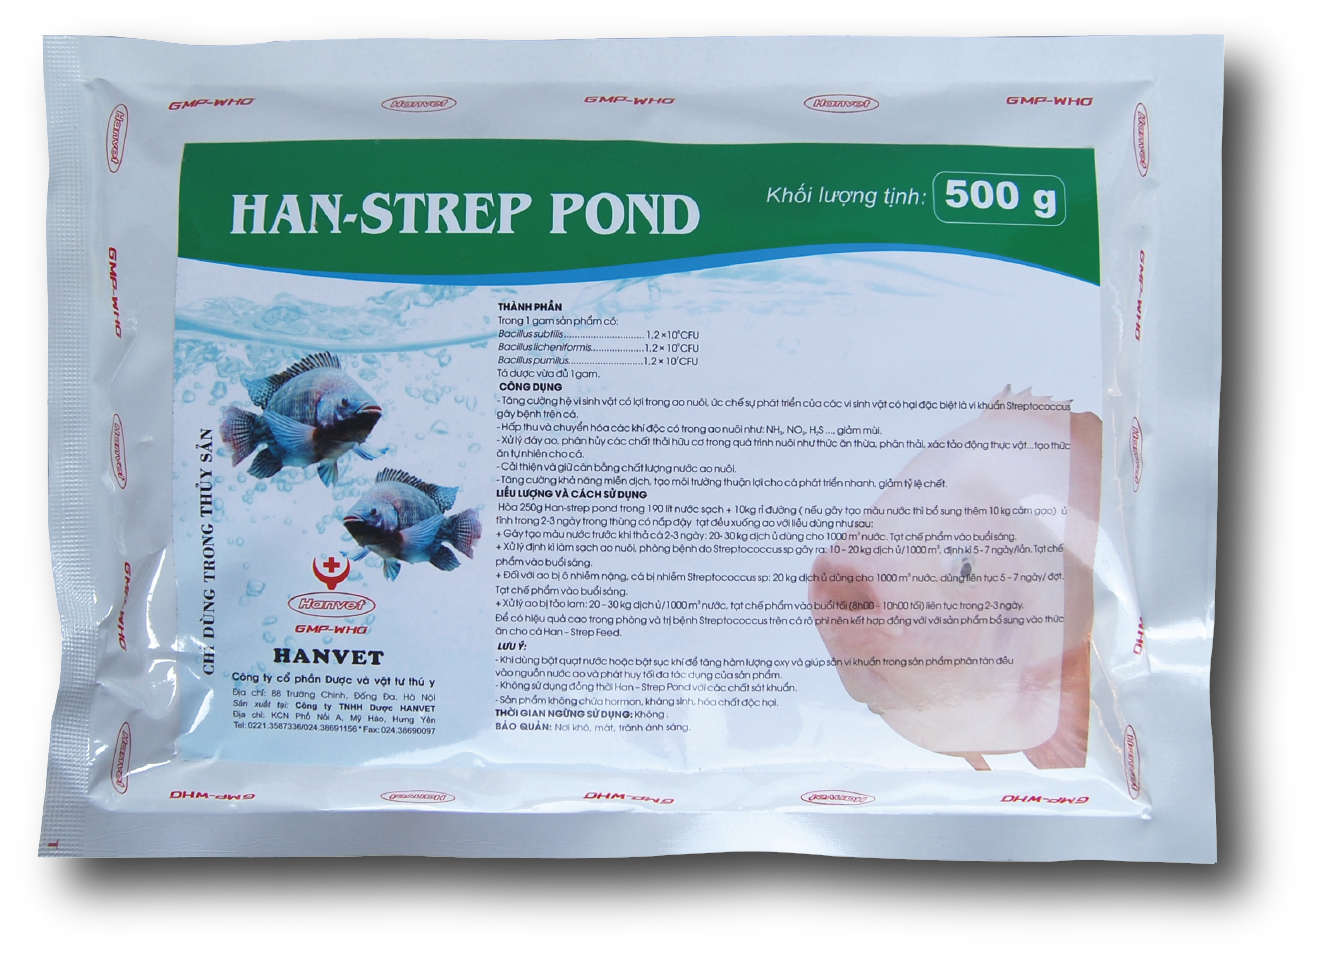 HAN- STREP POND